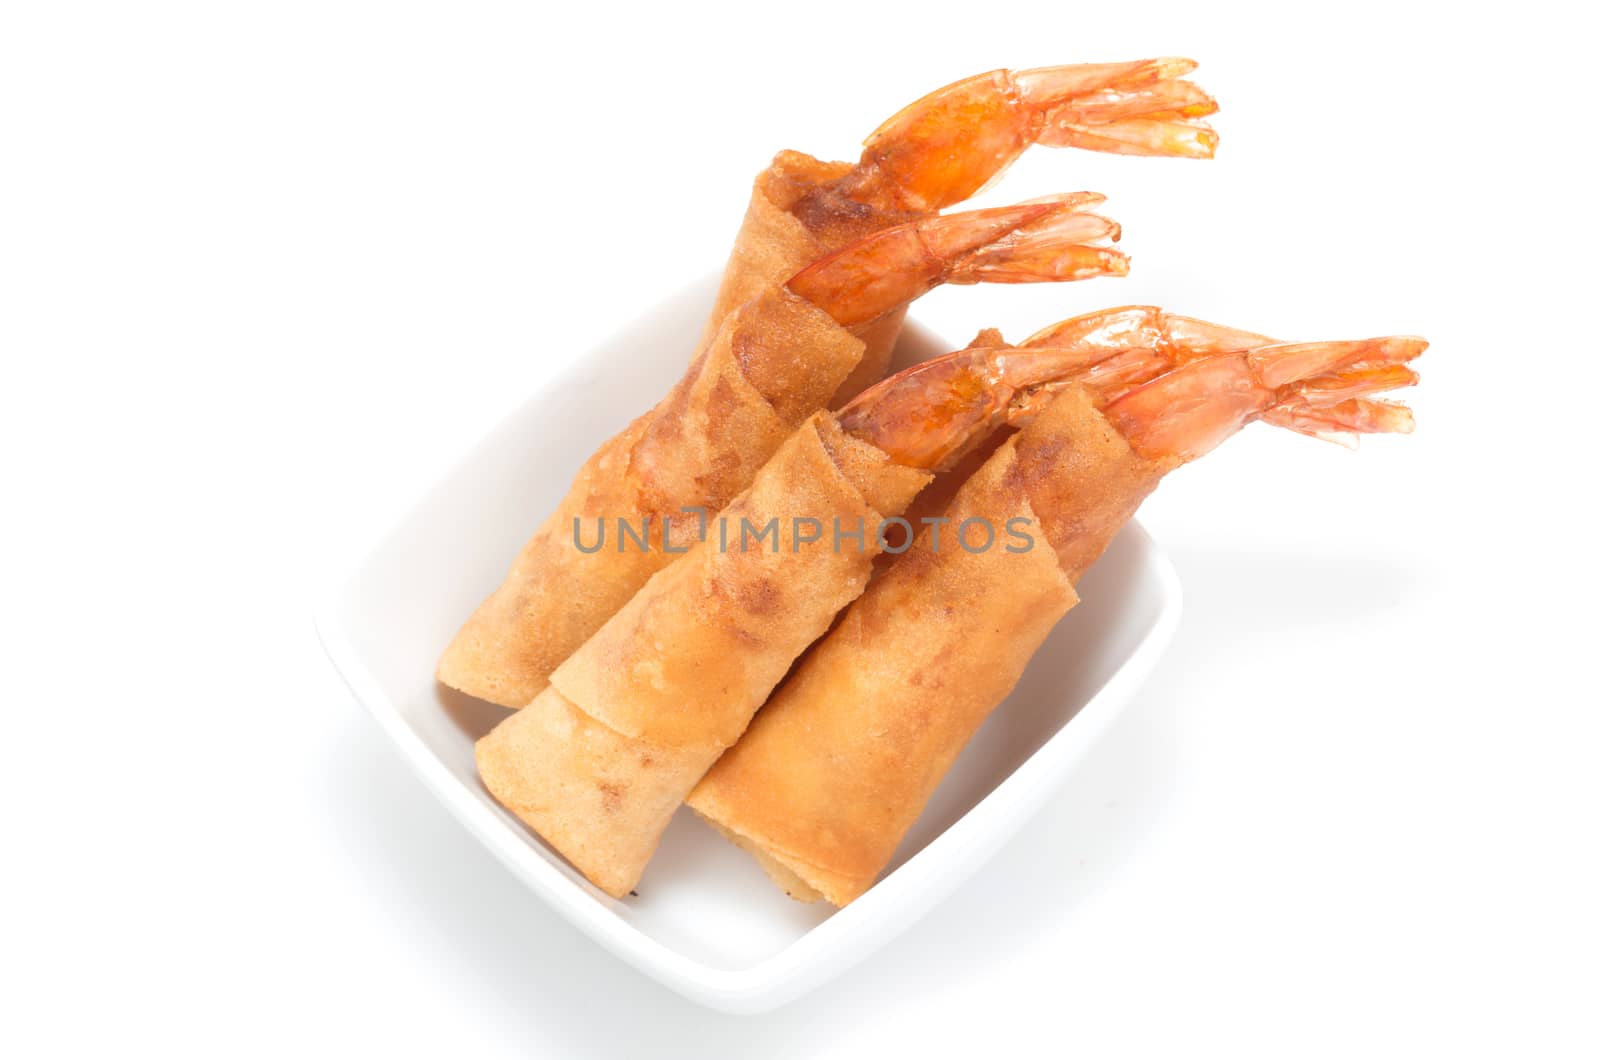 Vietnamese deep fried shrimps plate by daoleduc